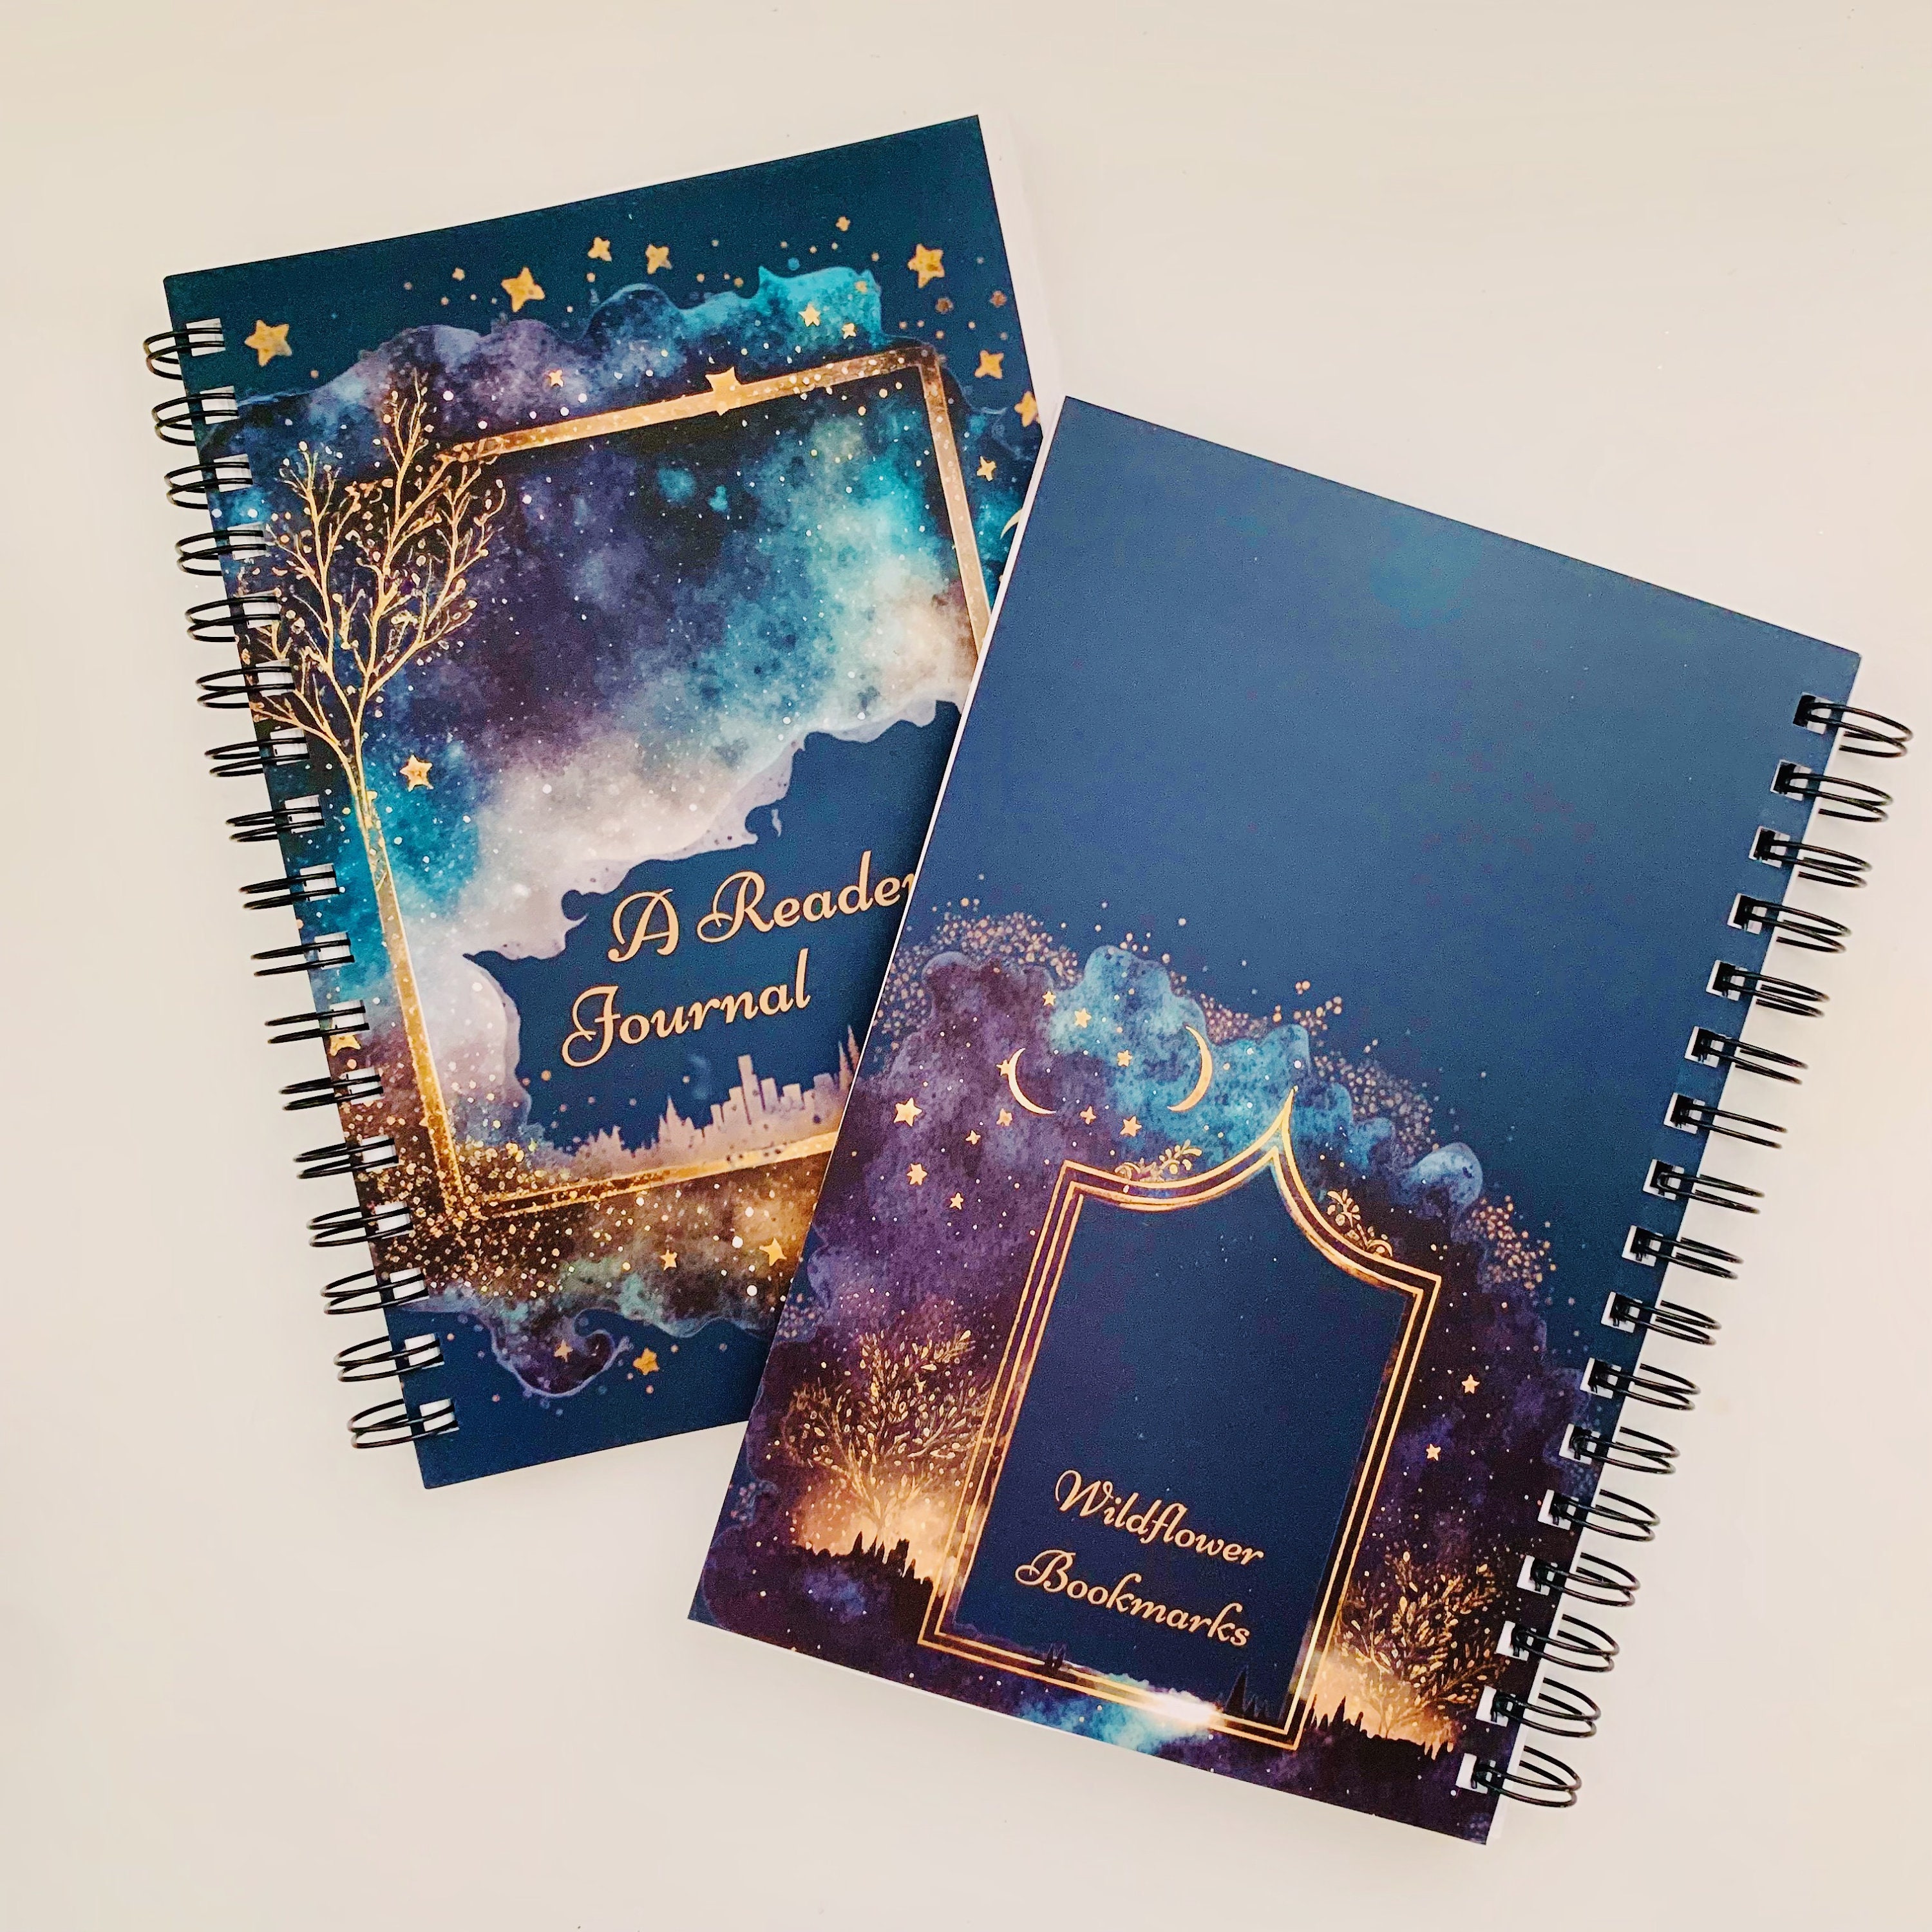 Celestial Journal Hardcover Journal for Sale by PandemoniaLLC